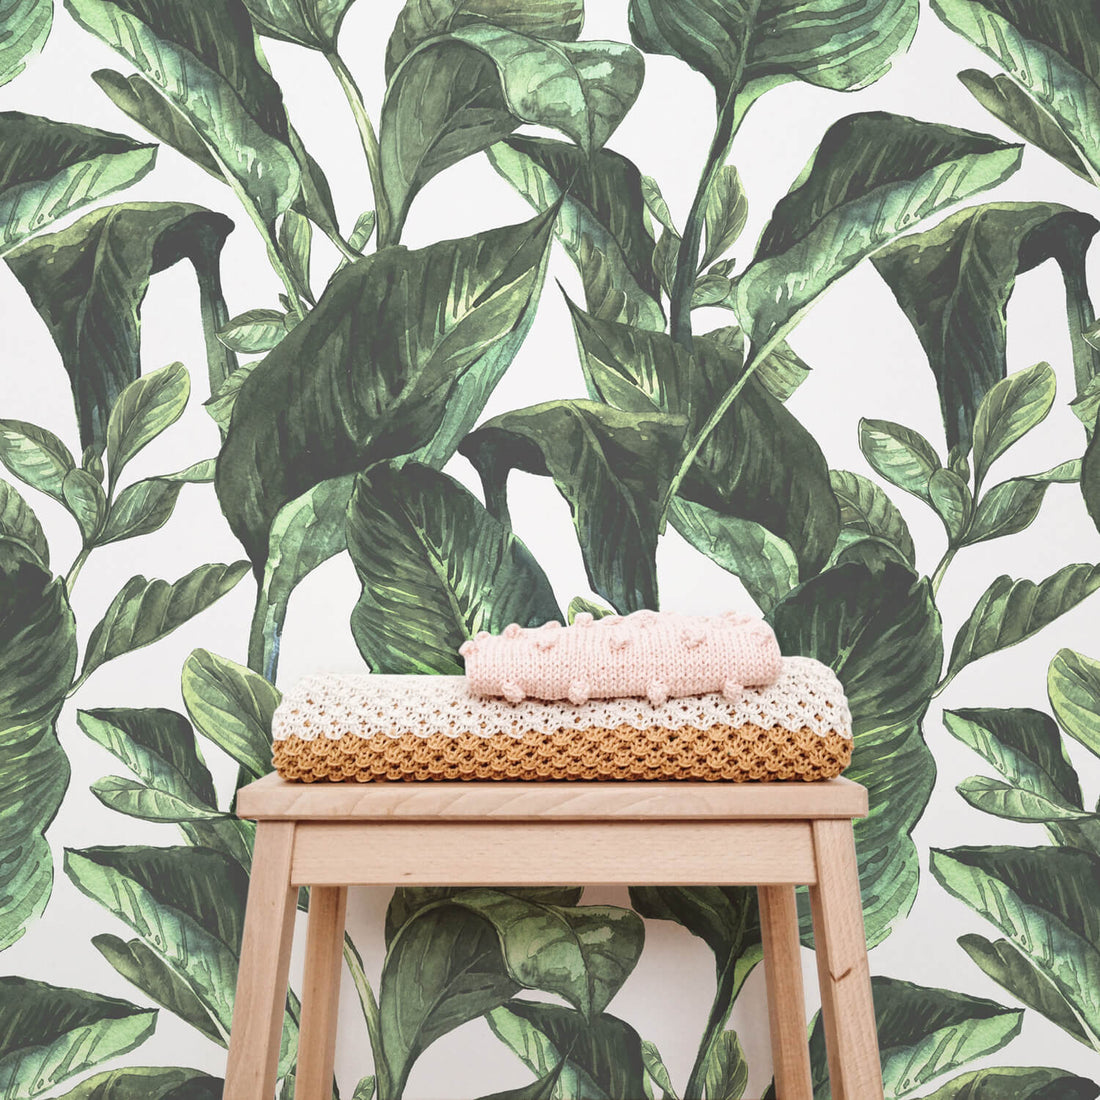 Botanical print removable wallpaper for kid's room interiors 